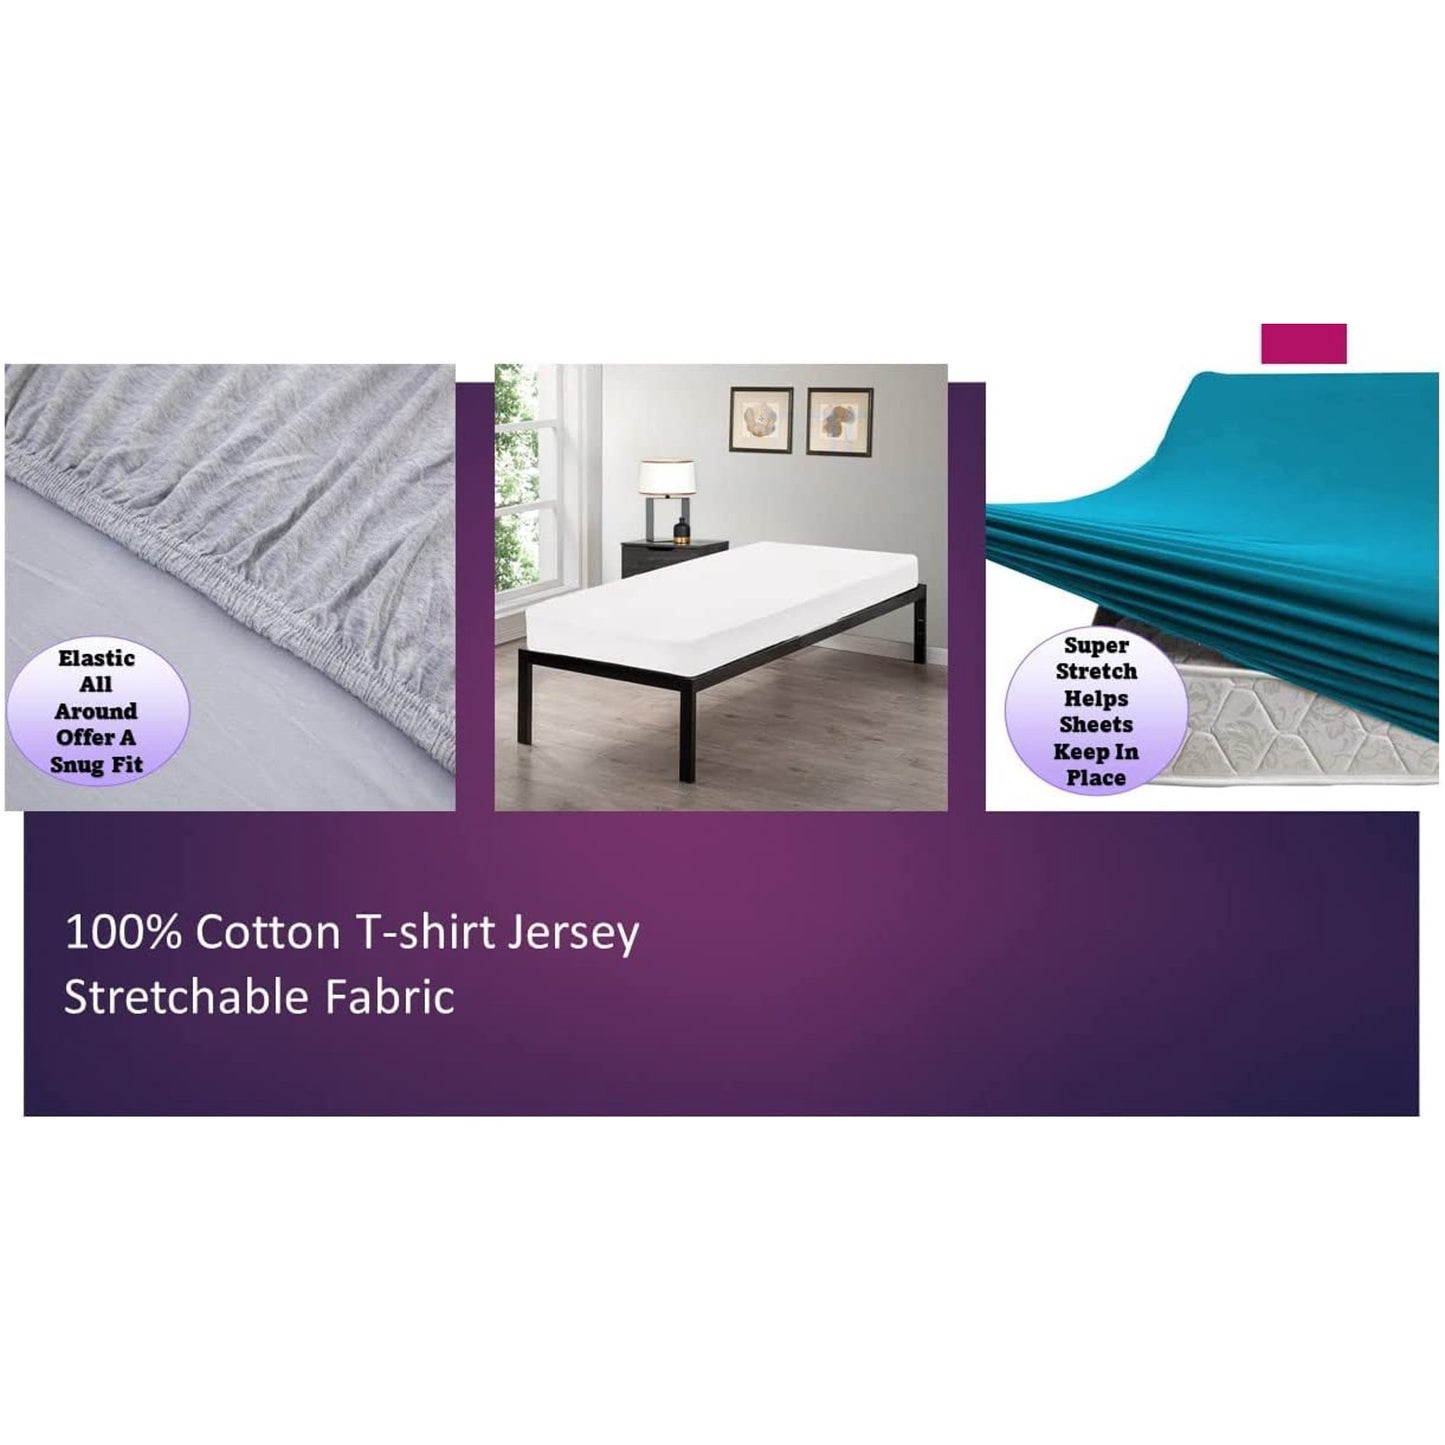 100% Combed T-Shirt Cotton Jersey Knit Camp Sheet Set, 1 Fitted cot Sheet, 1 Flat Sheet, 1 Standard Pillow case White